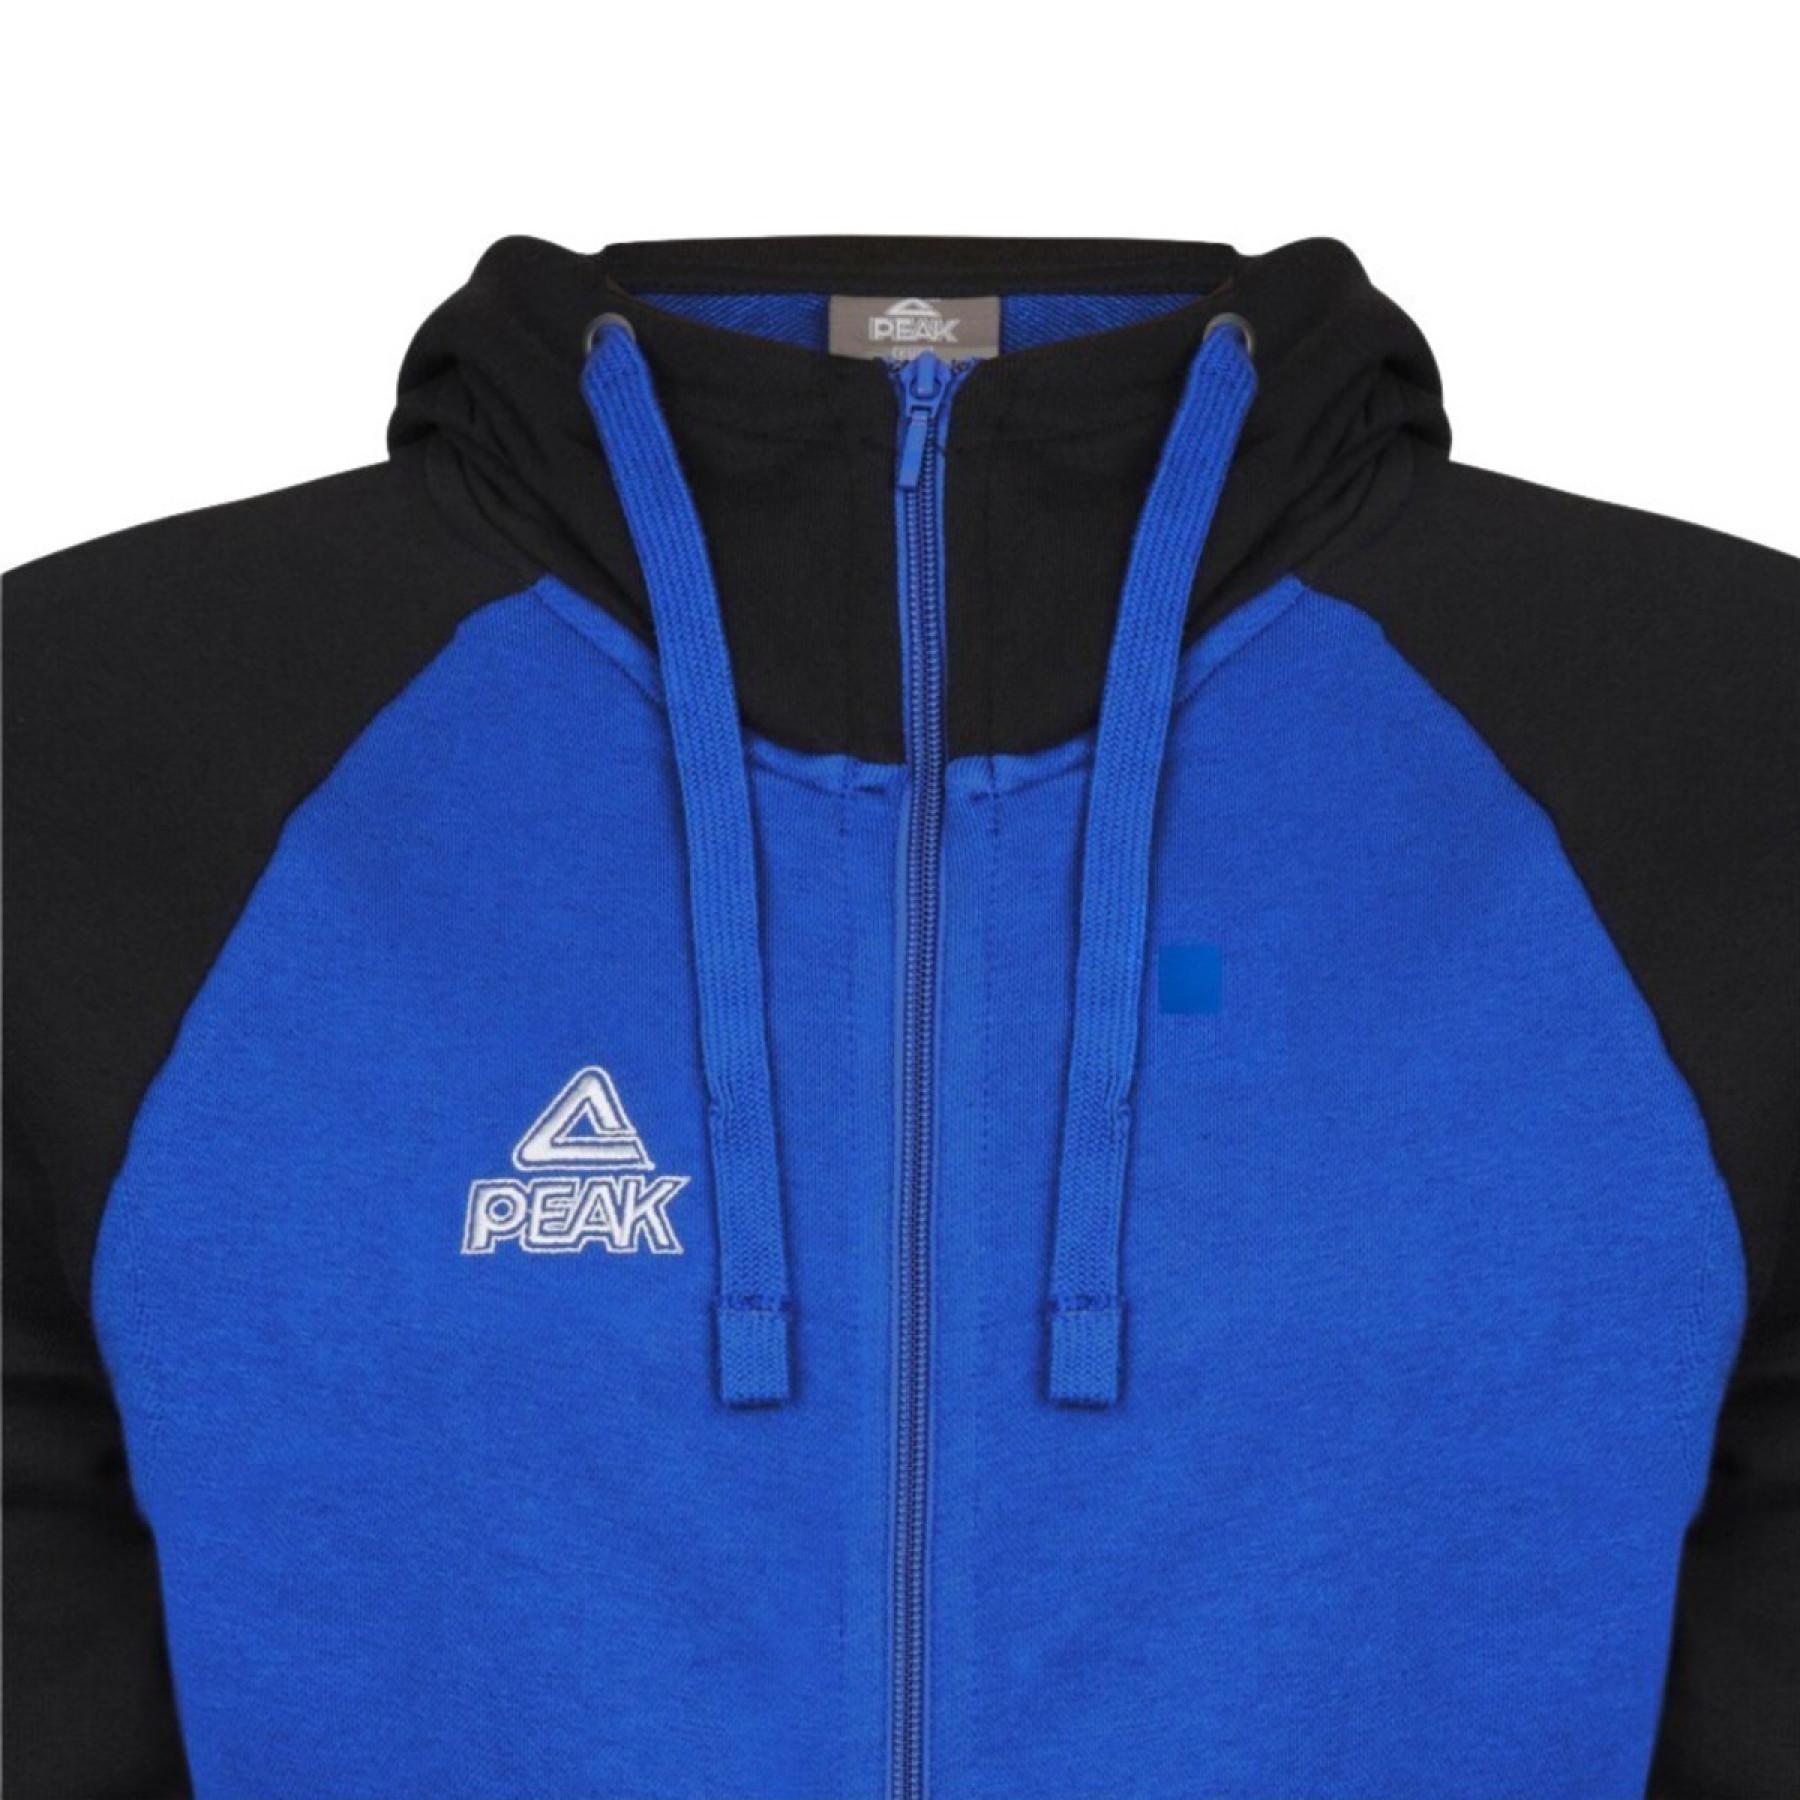 Sweatshirt à capuche Peak zip bi-color élite